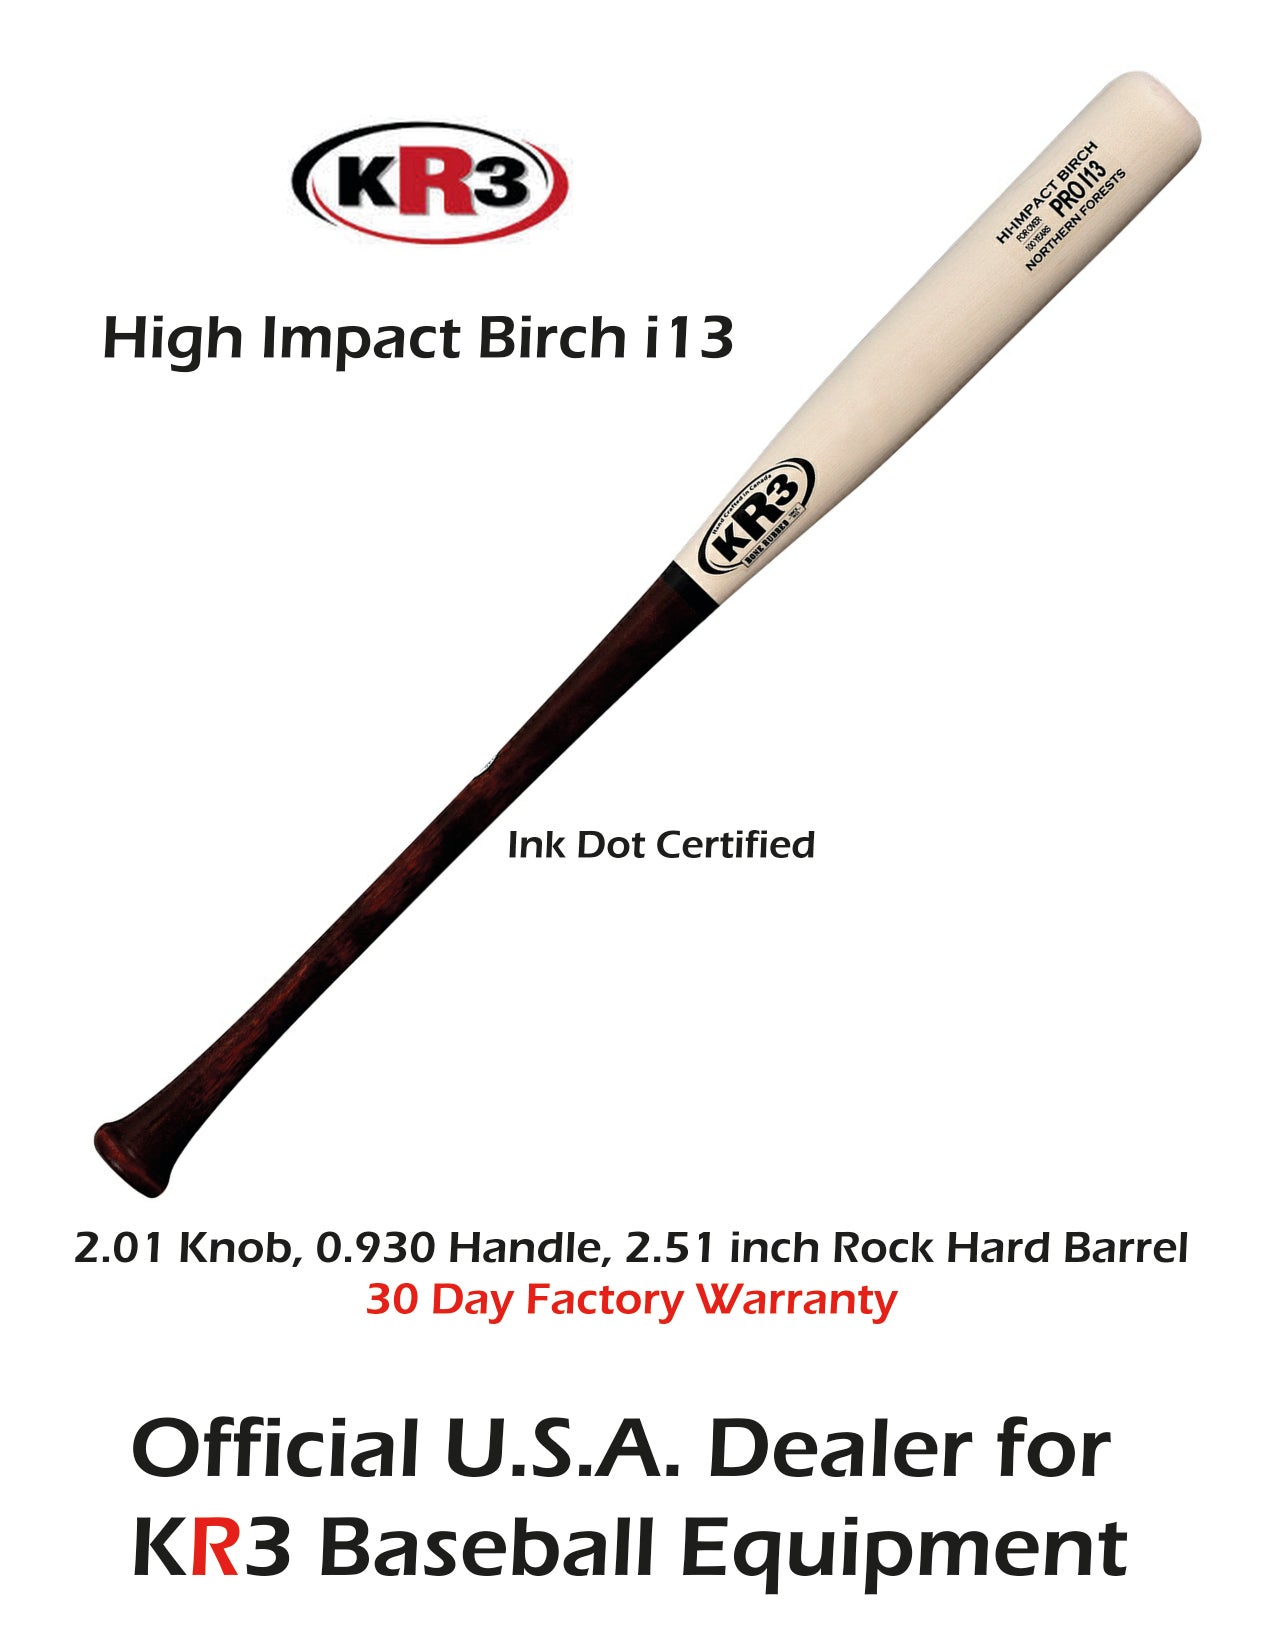 KR3 i13 High Impact Birch 33.5 inch Wood Bat (-3) 31 oz 1 month factory warranty